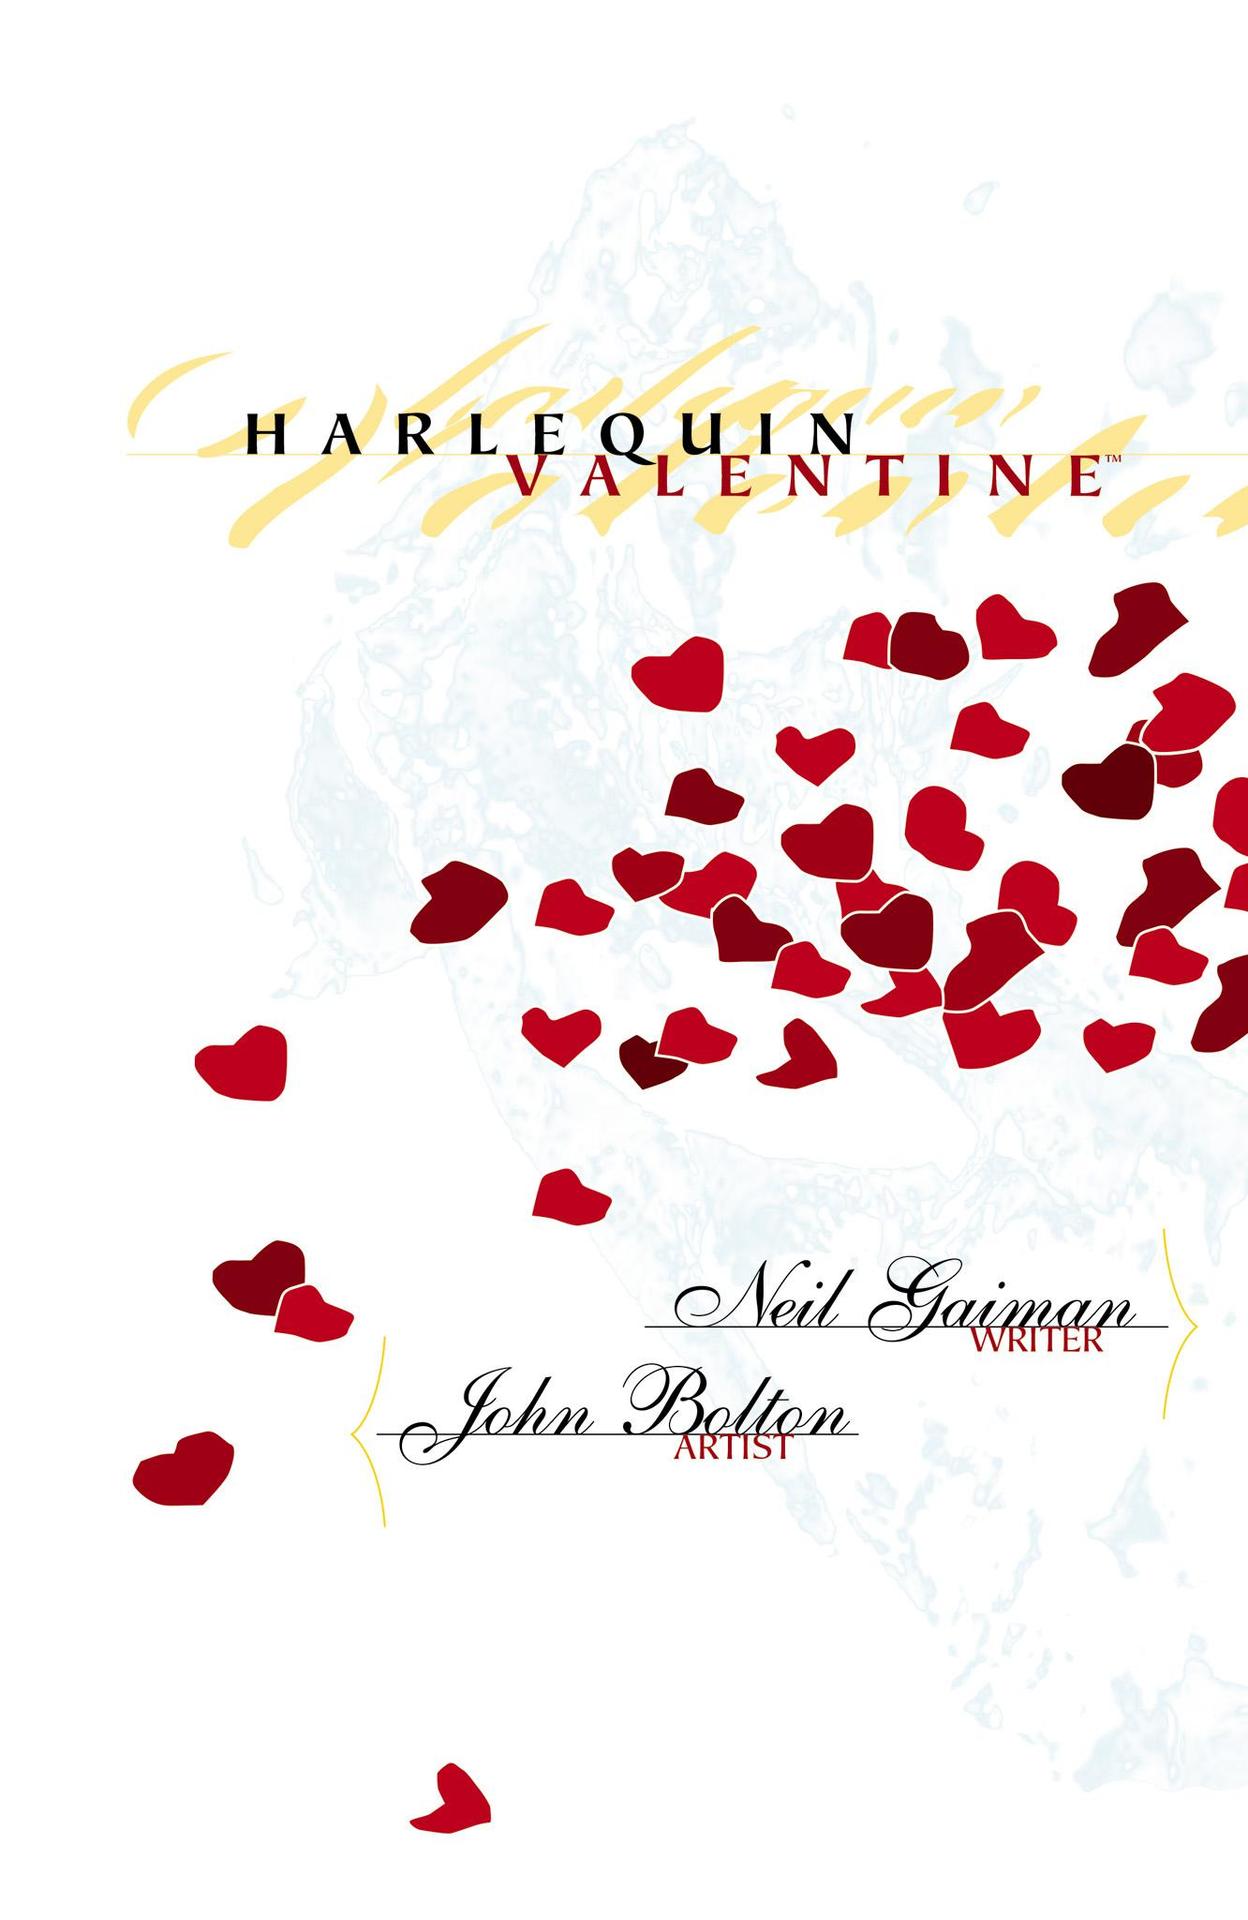 Read online Harlequin Valentine comic -  Issue # Full - 2